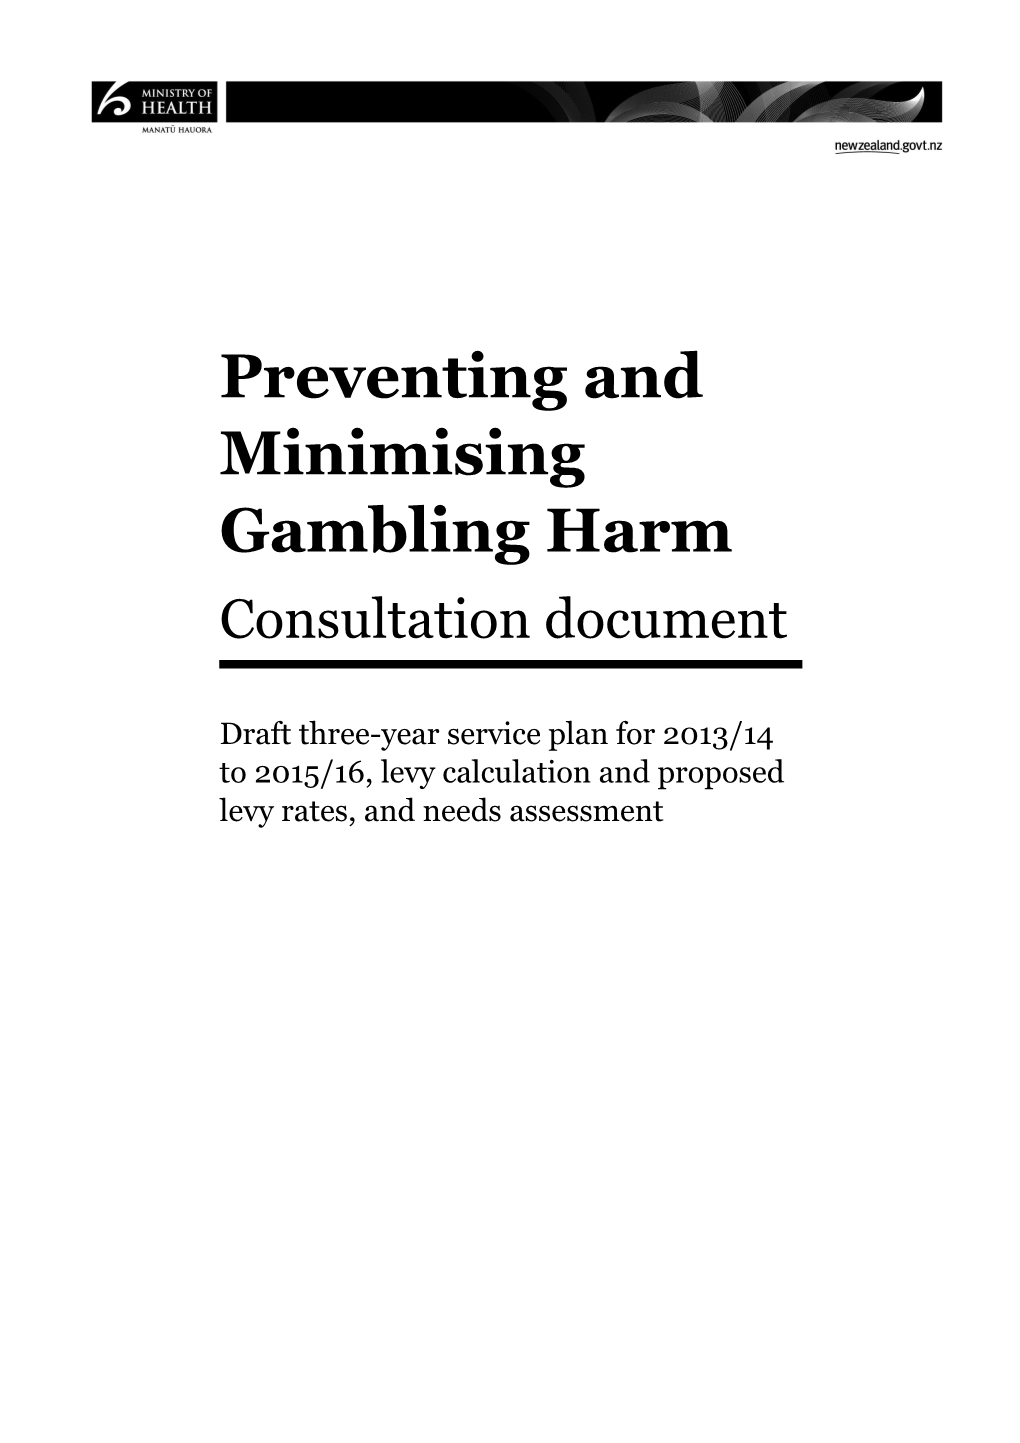 Preventing and Minimising Gambling Harm